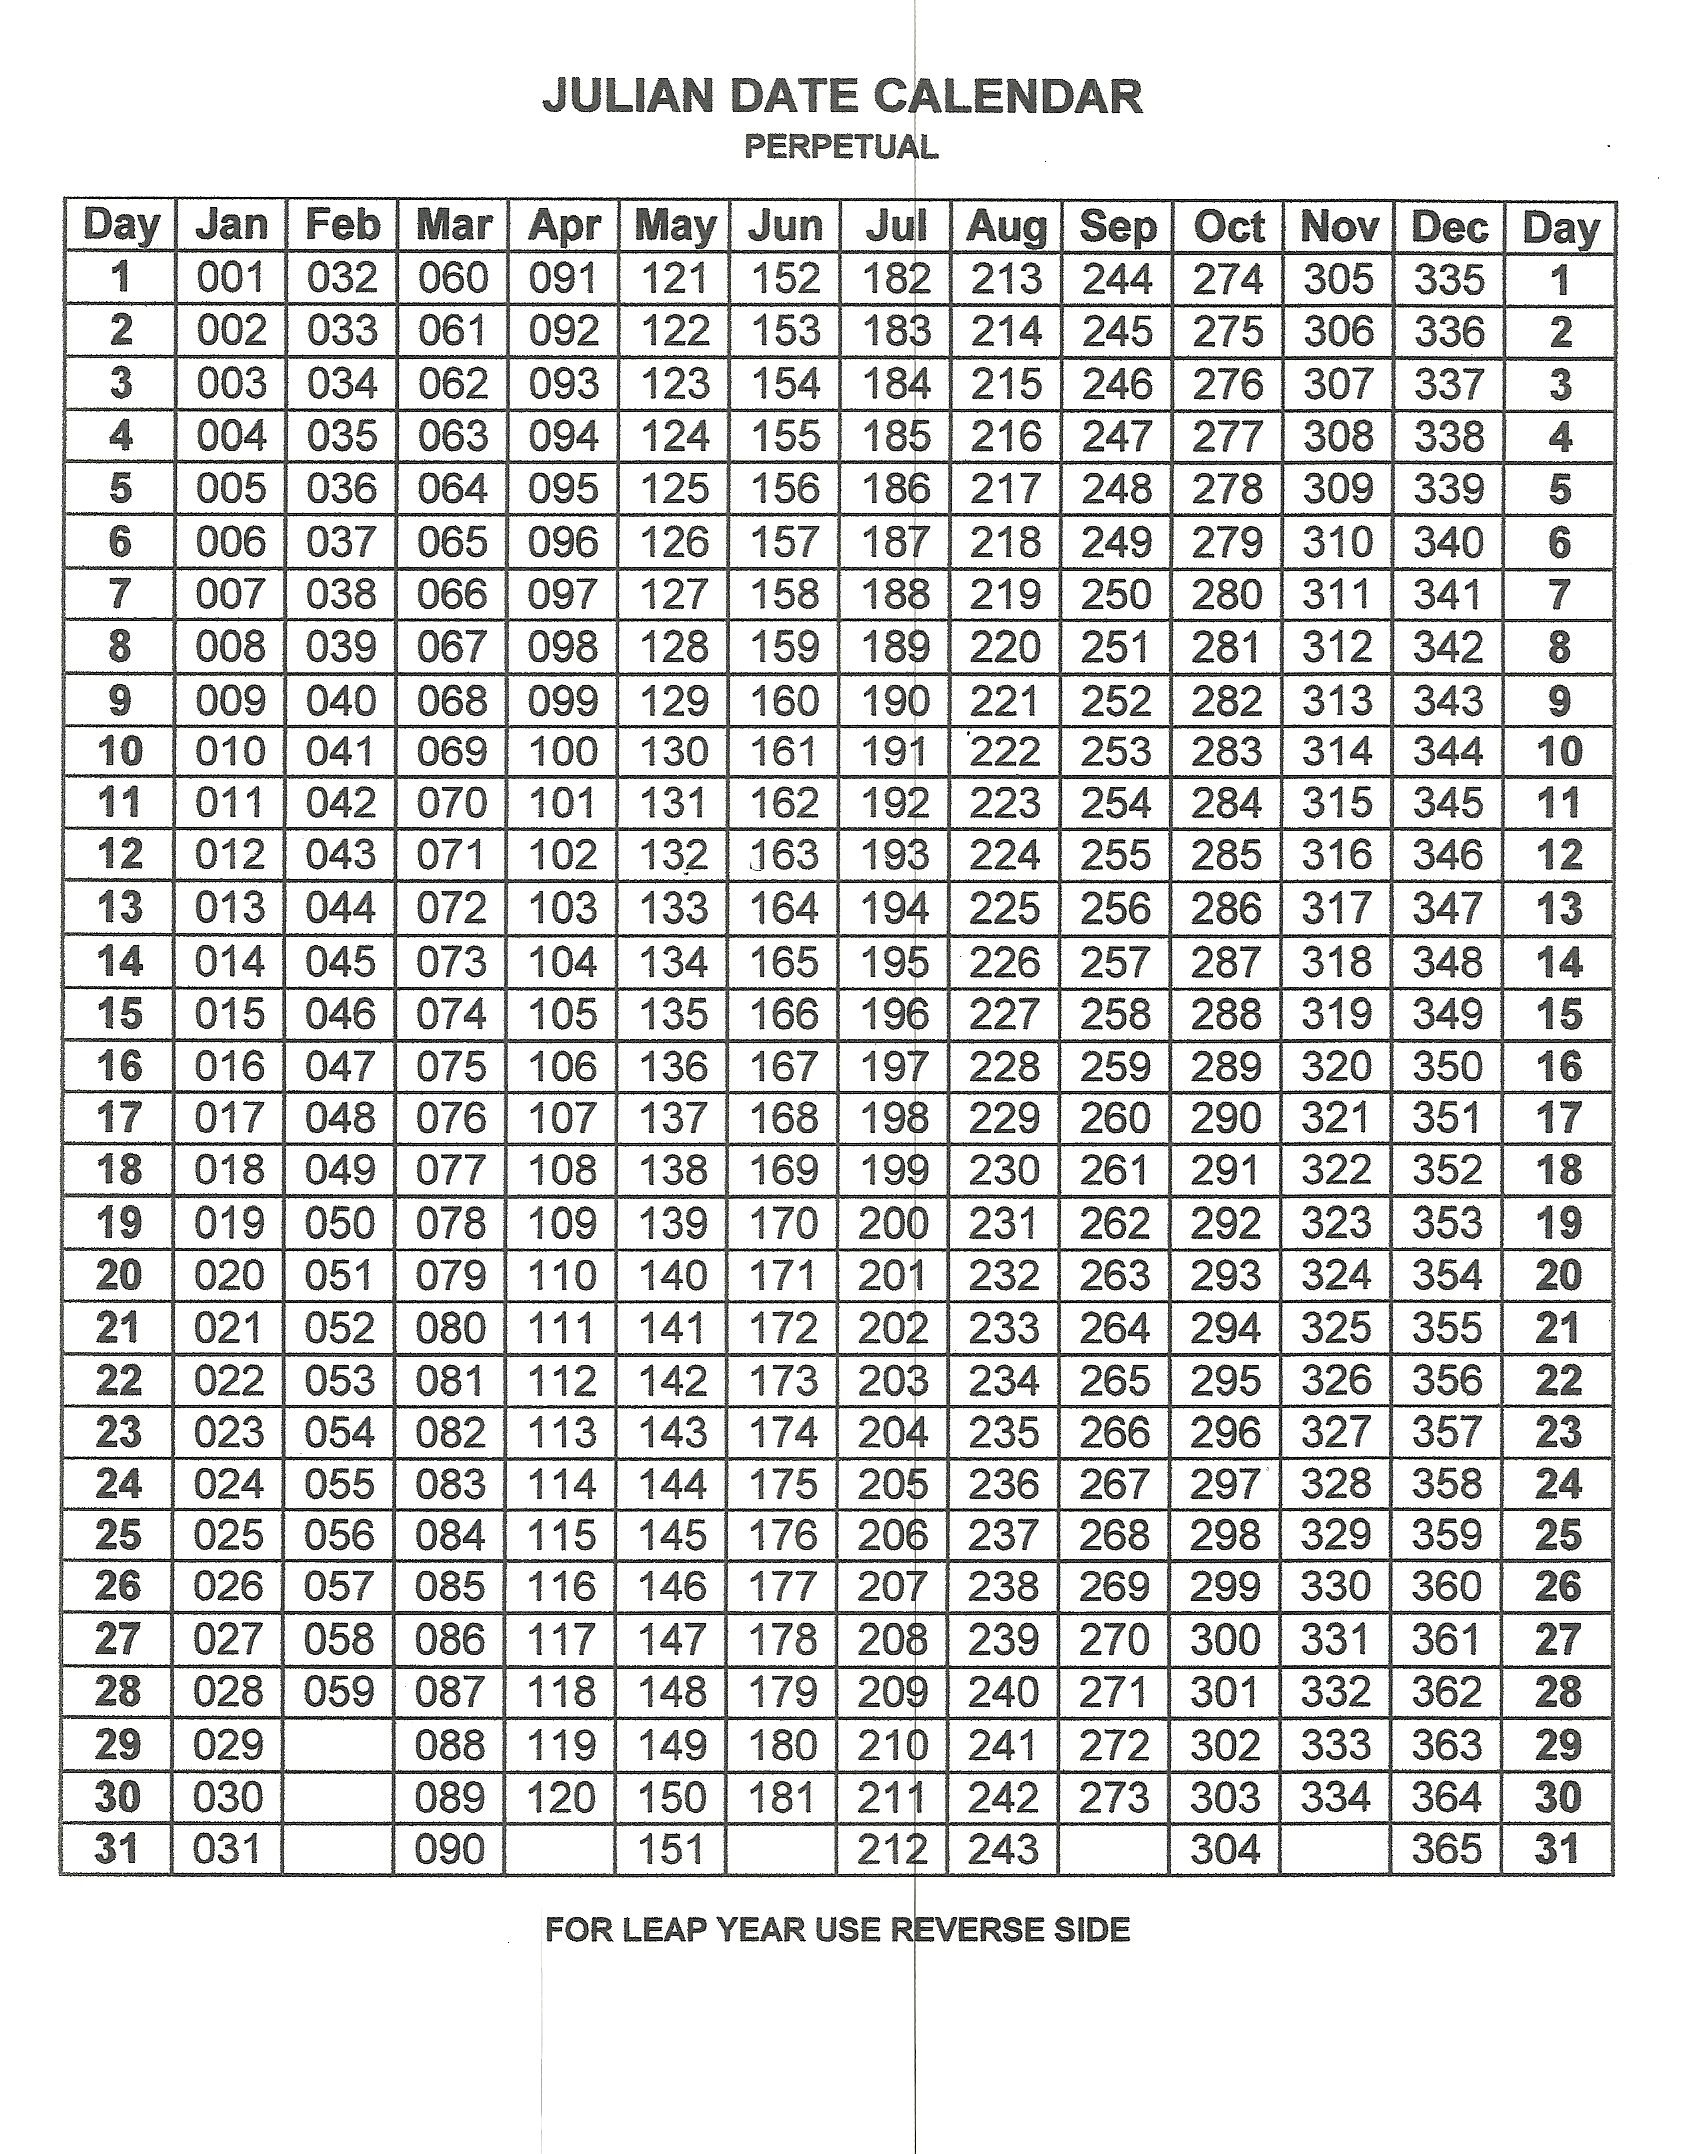 Perpetual Julian Date Calendar | Julian Dates, Calendar 2021 Yearly Julian Calendar